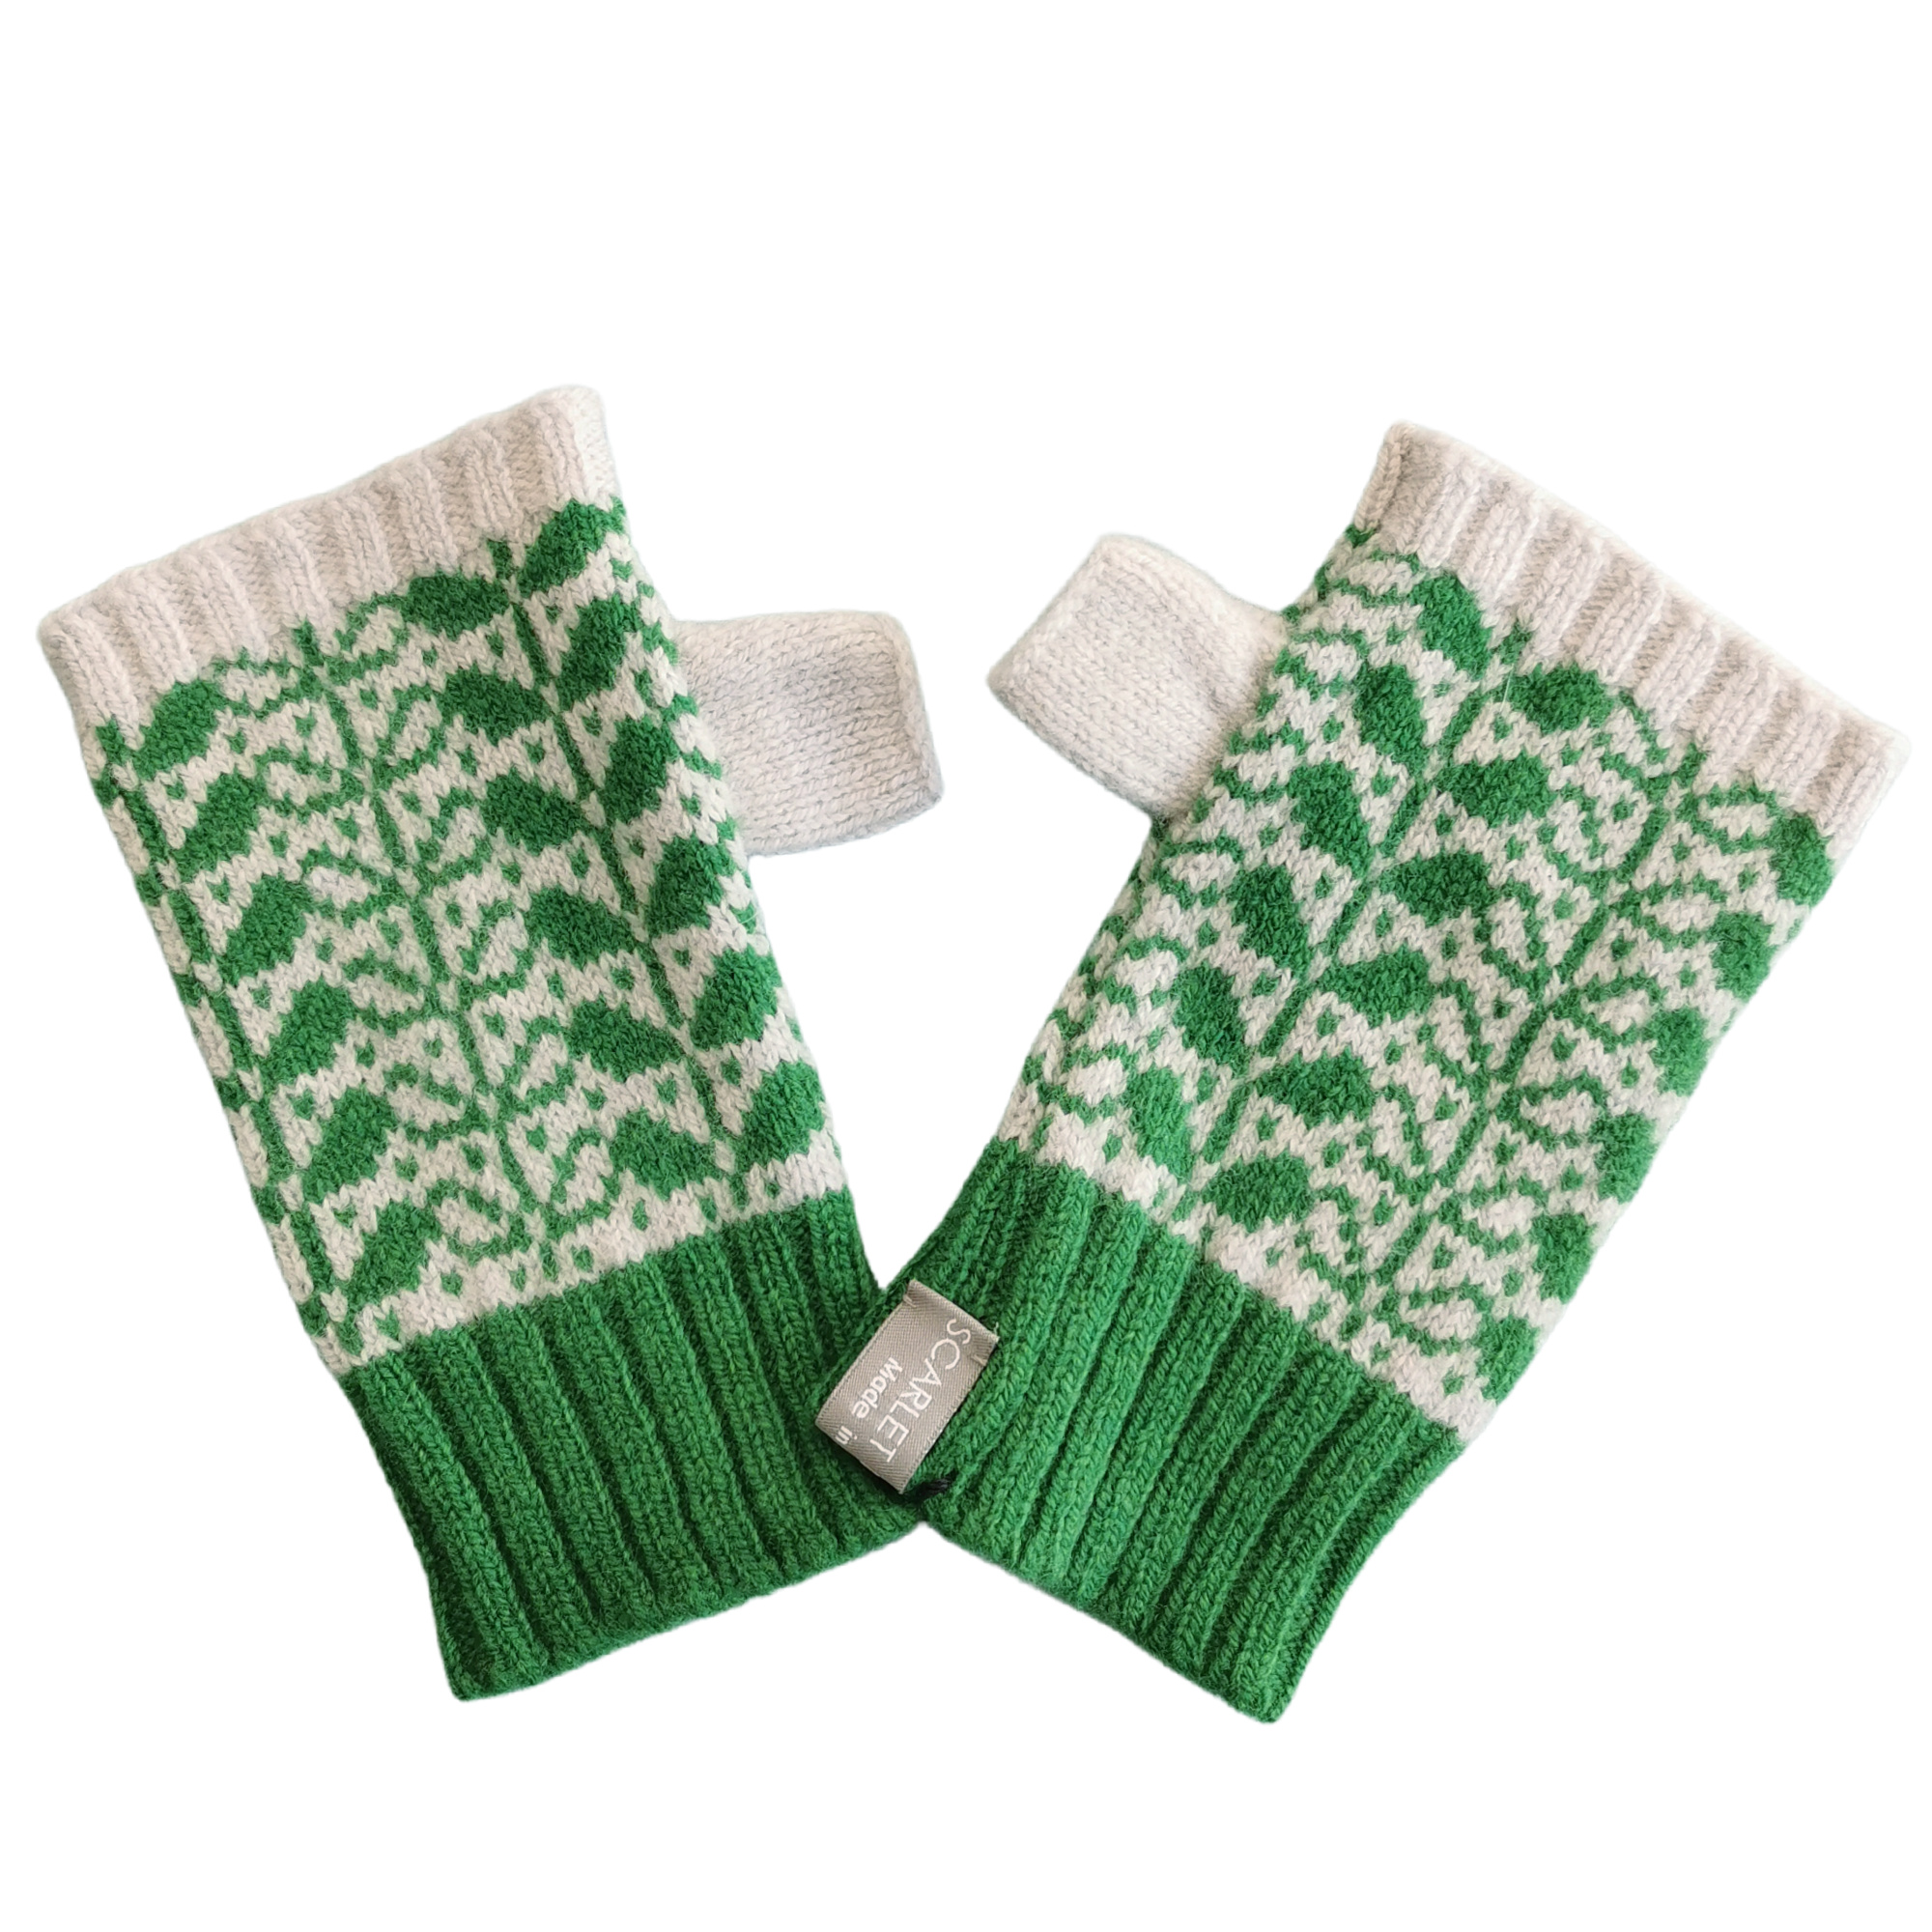 Leaf Design Fingerless Gloves by Scarlet Knitwear